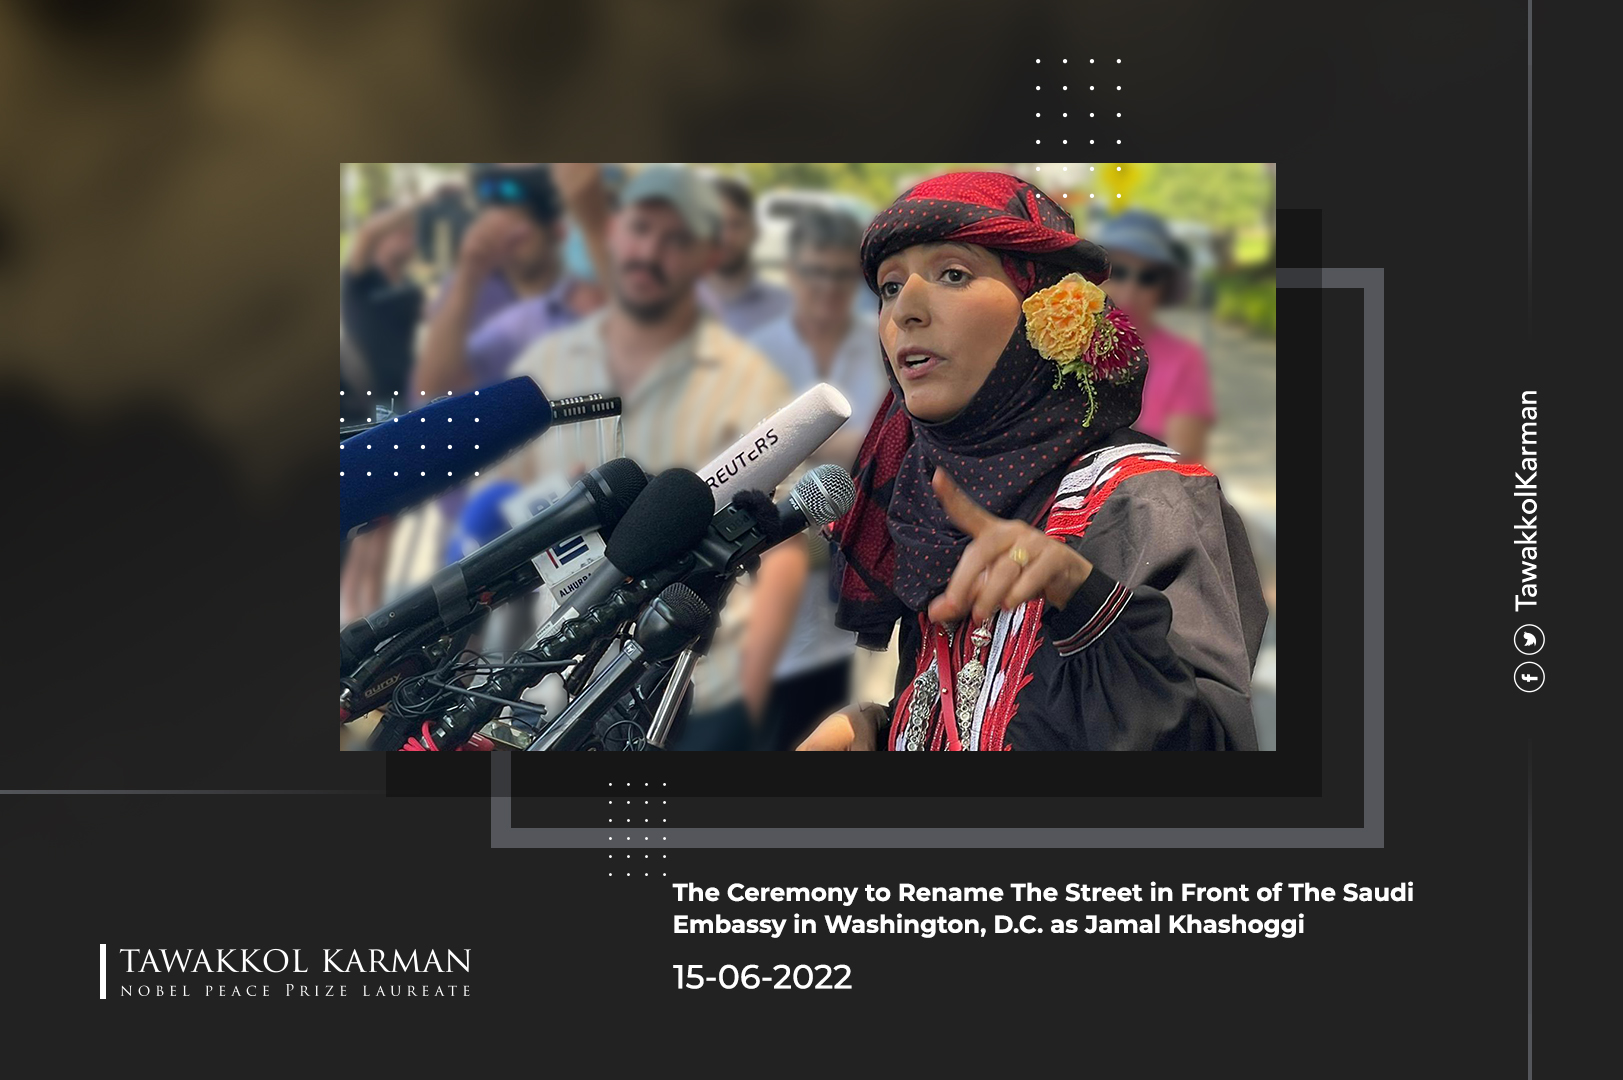 Tawakkol Karman's Participation in the ceremony to rename the street in front of the Saudi Embassy in Washington, D.C. as Jamal Khashoggi